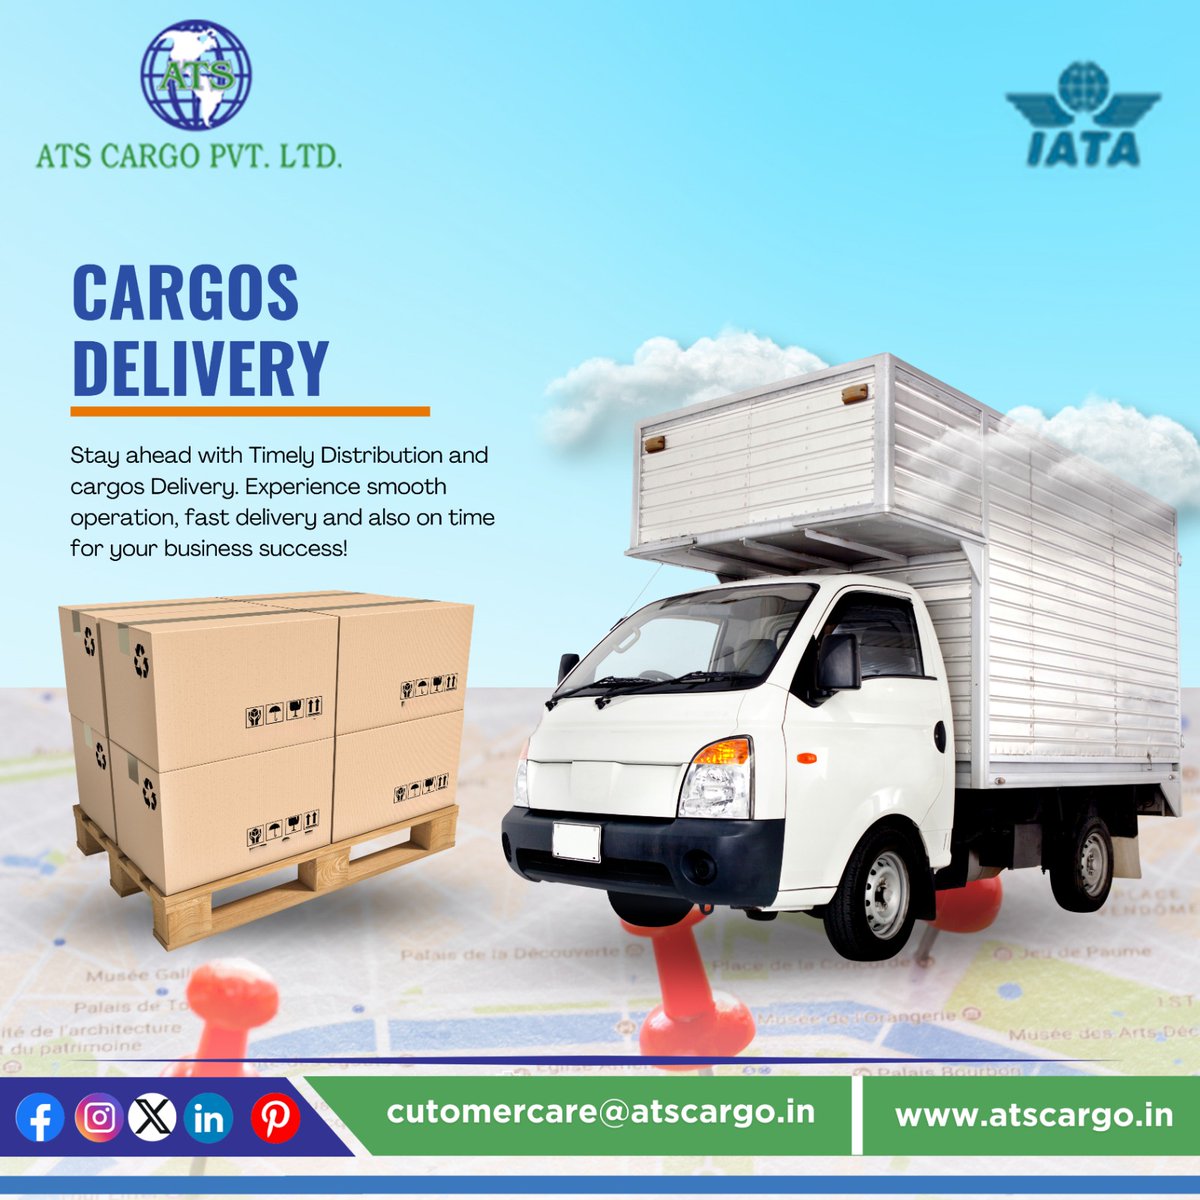 Global Cargo Partnerships You Can Trust.🚚🚚

#CargoShipping #FreightLogistics #SupplyChain #CargoTransport #ShippingIndustry
#CargoHandling #LogisticsSolutions #CargoManagement #FreightServices #ShippingBusiness #atscargo